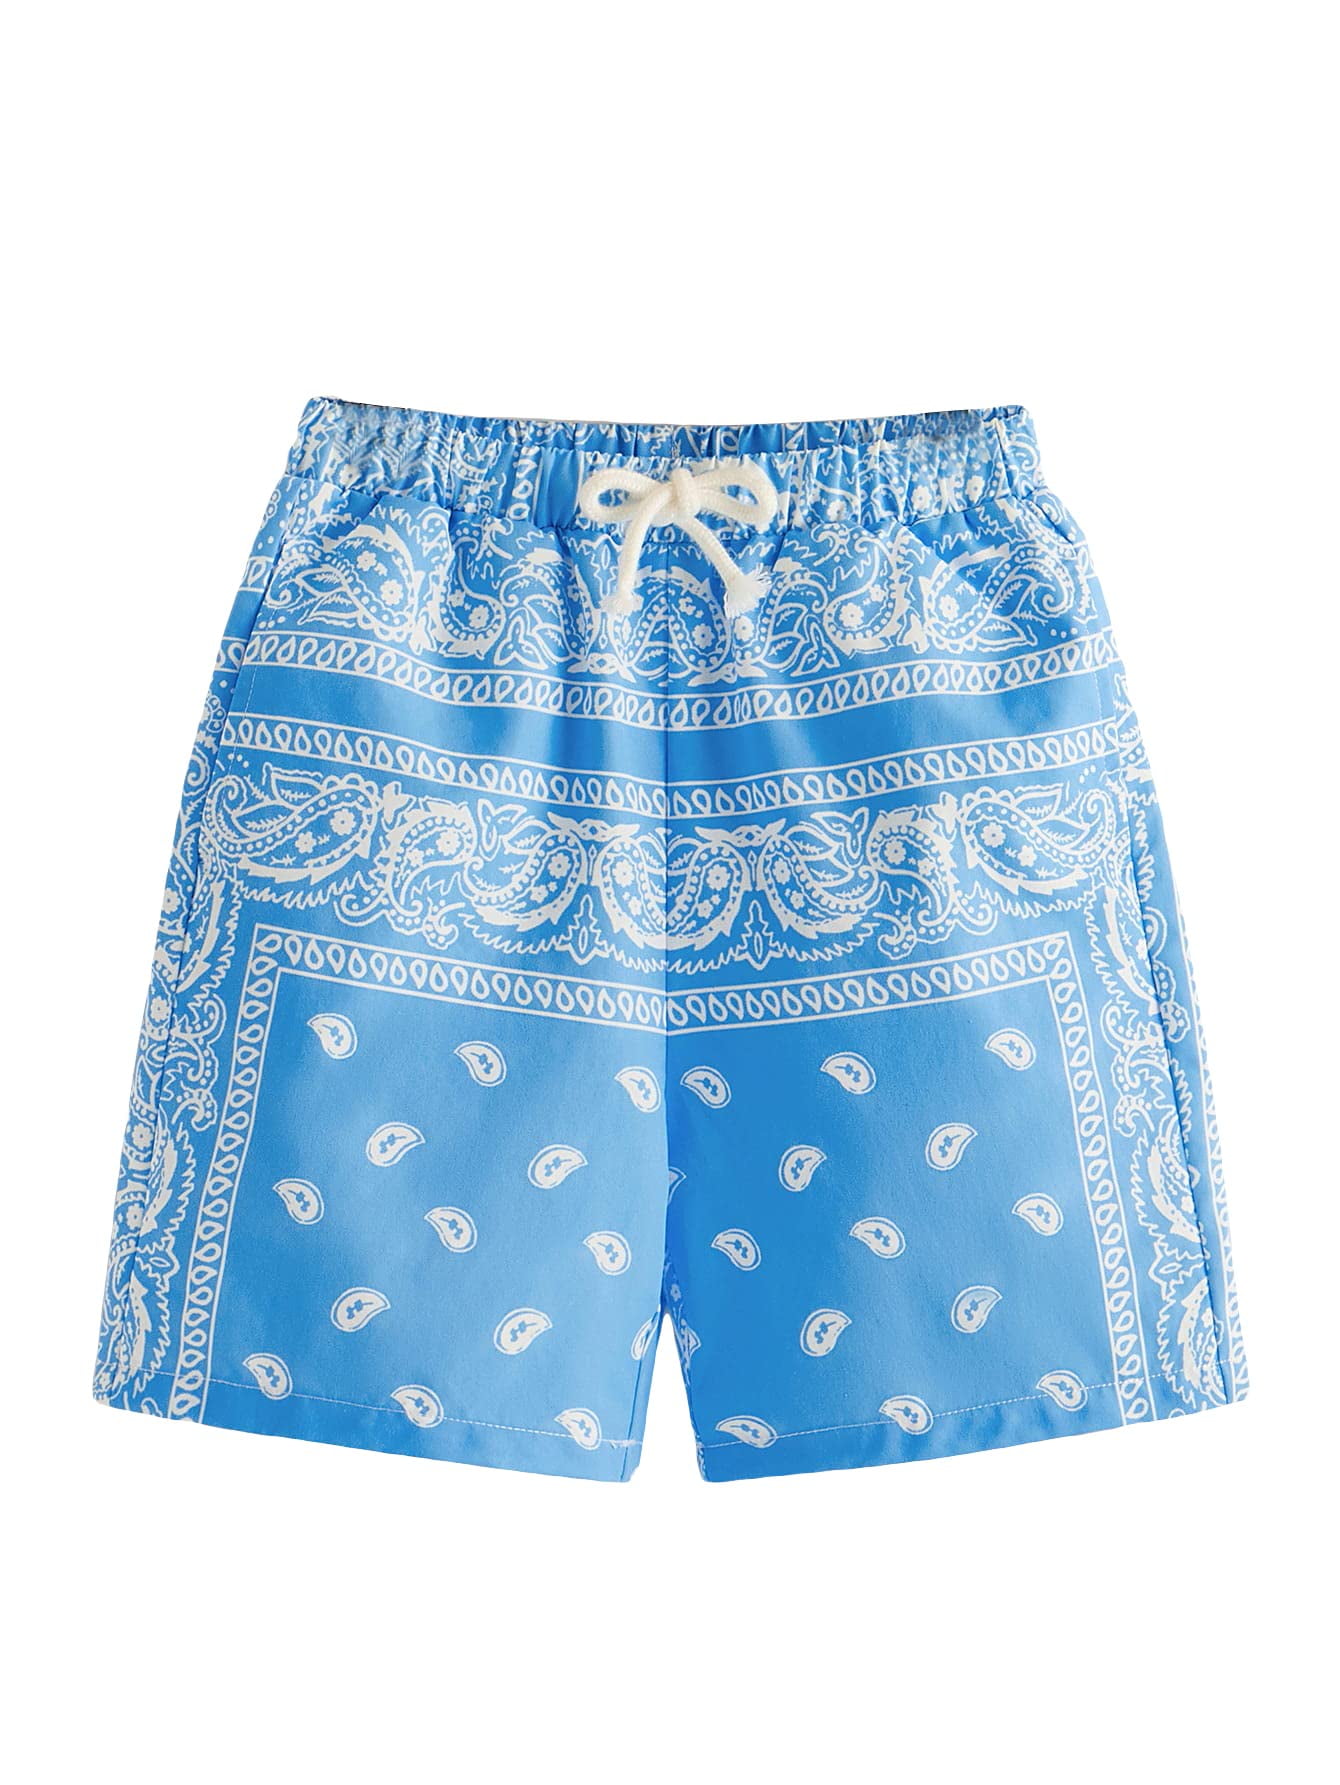 SOLY HUX Boy's Summer Boho Paisley Print Drawstring High Waisted Shorts ...